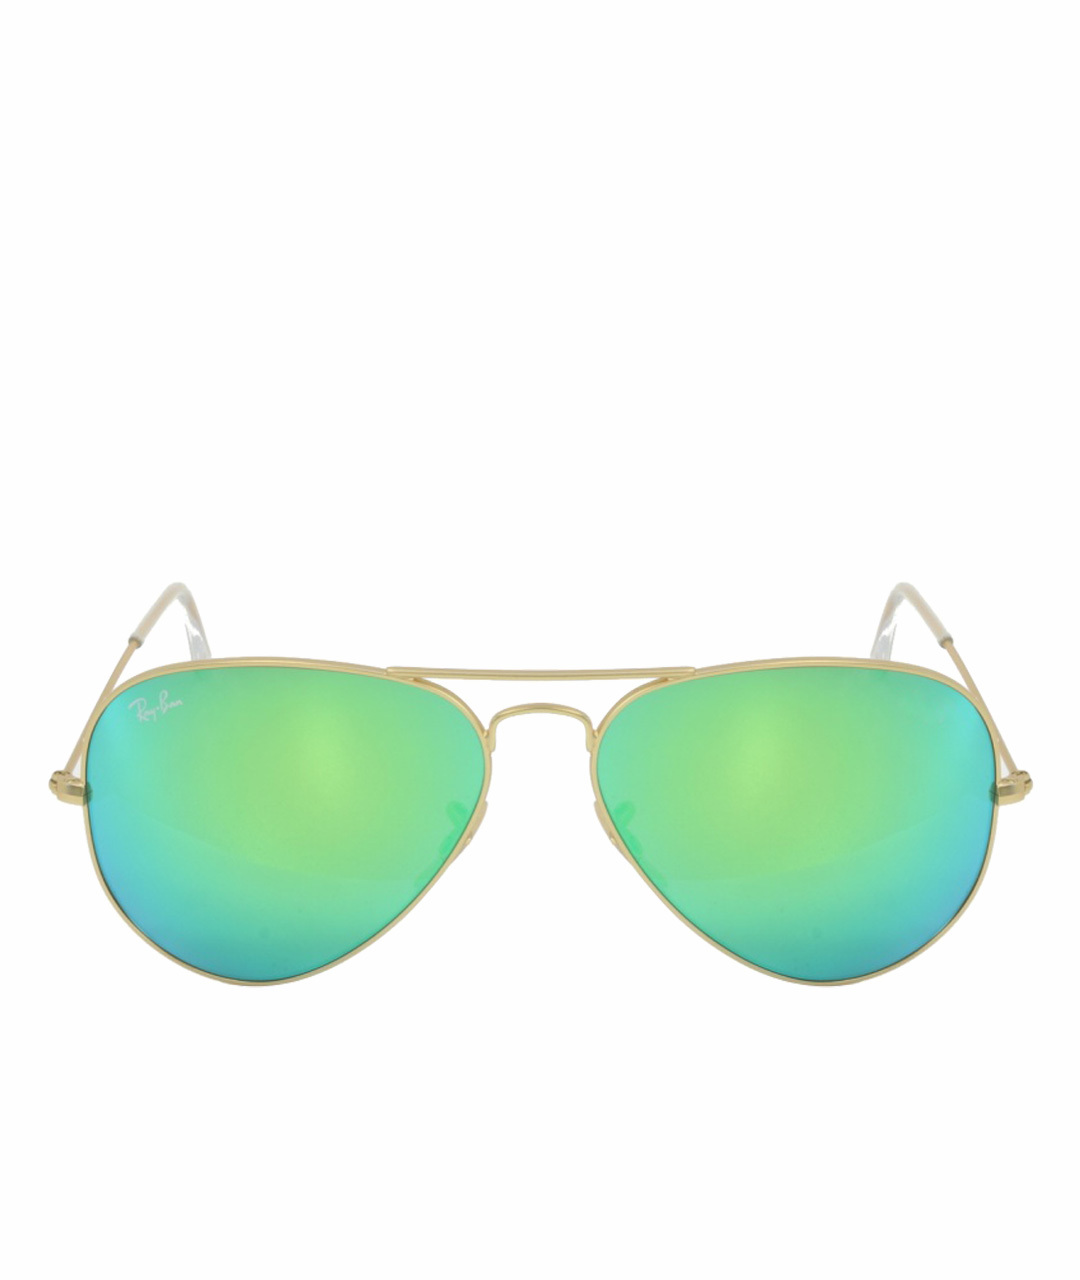 RAY BAN Зеленые солнцезащитные очки, фото 1